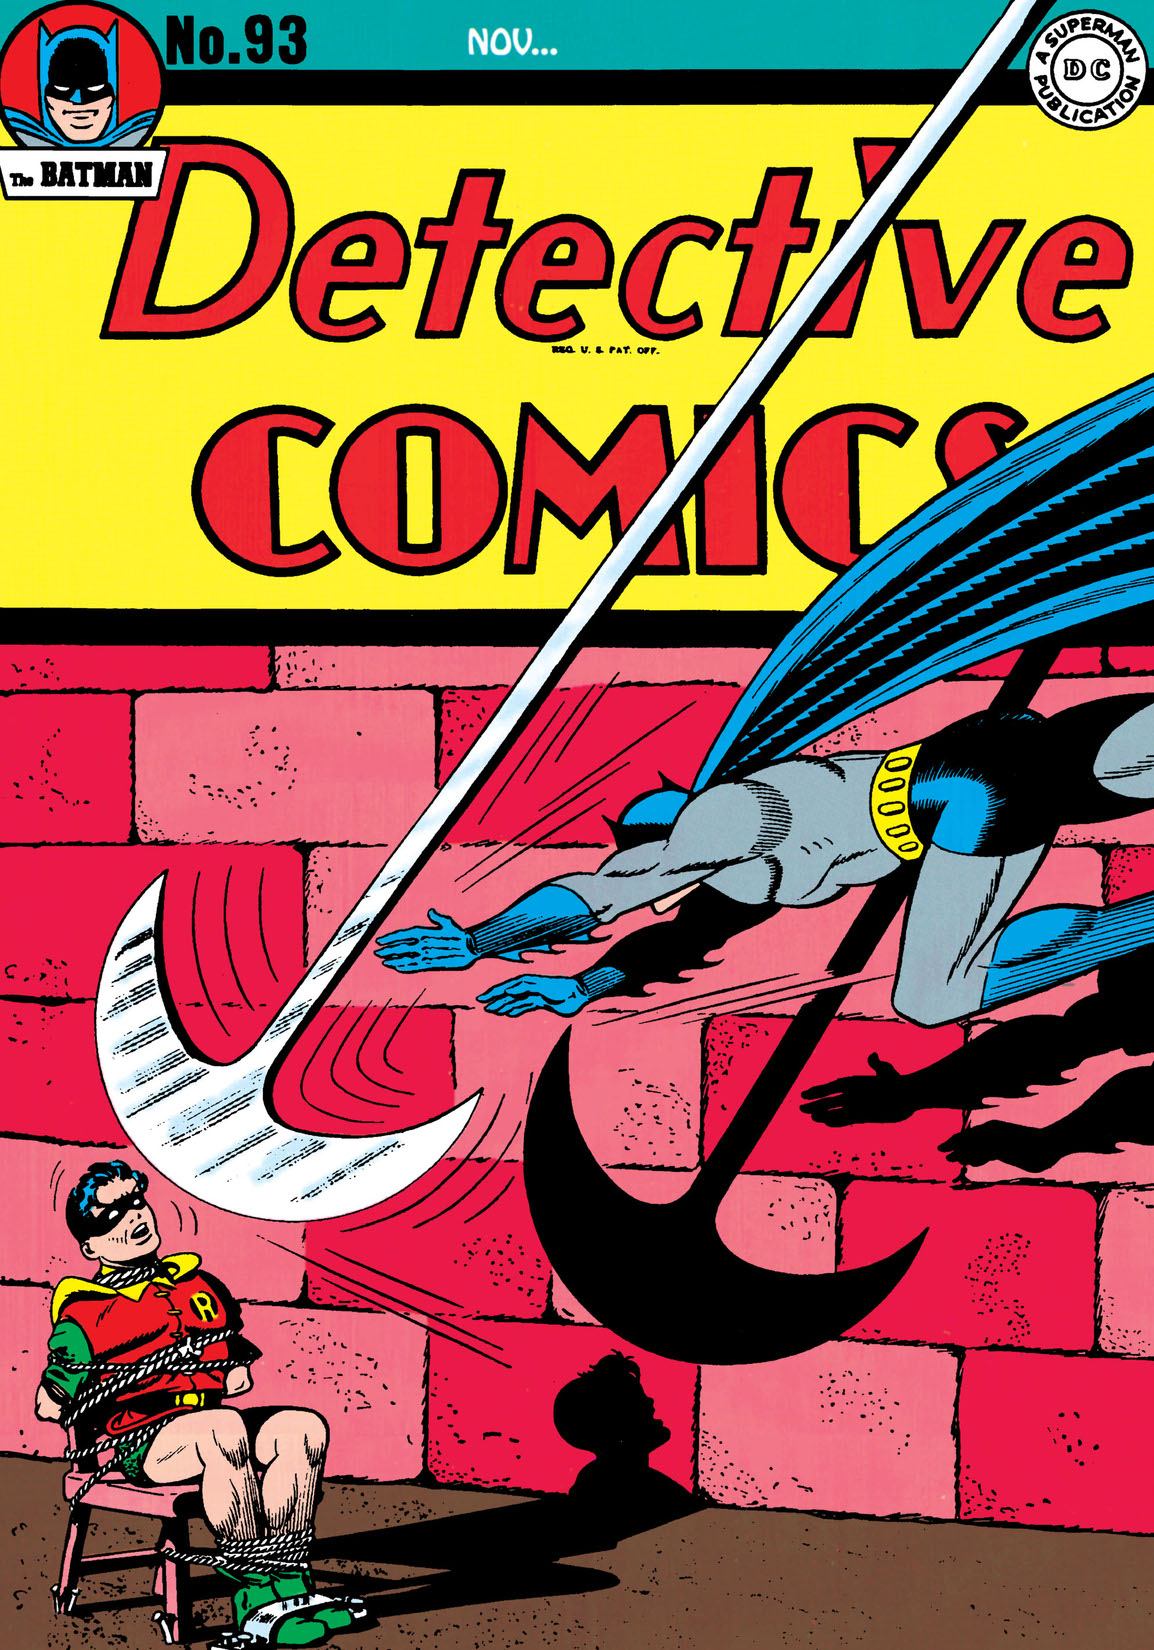 Detective Comics (1937-) #93 preview images